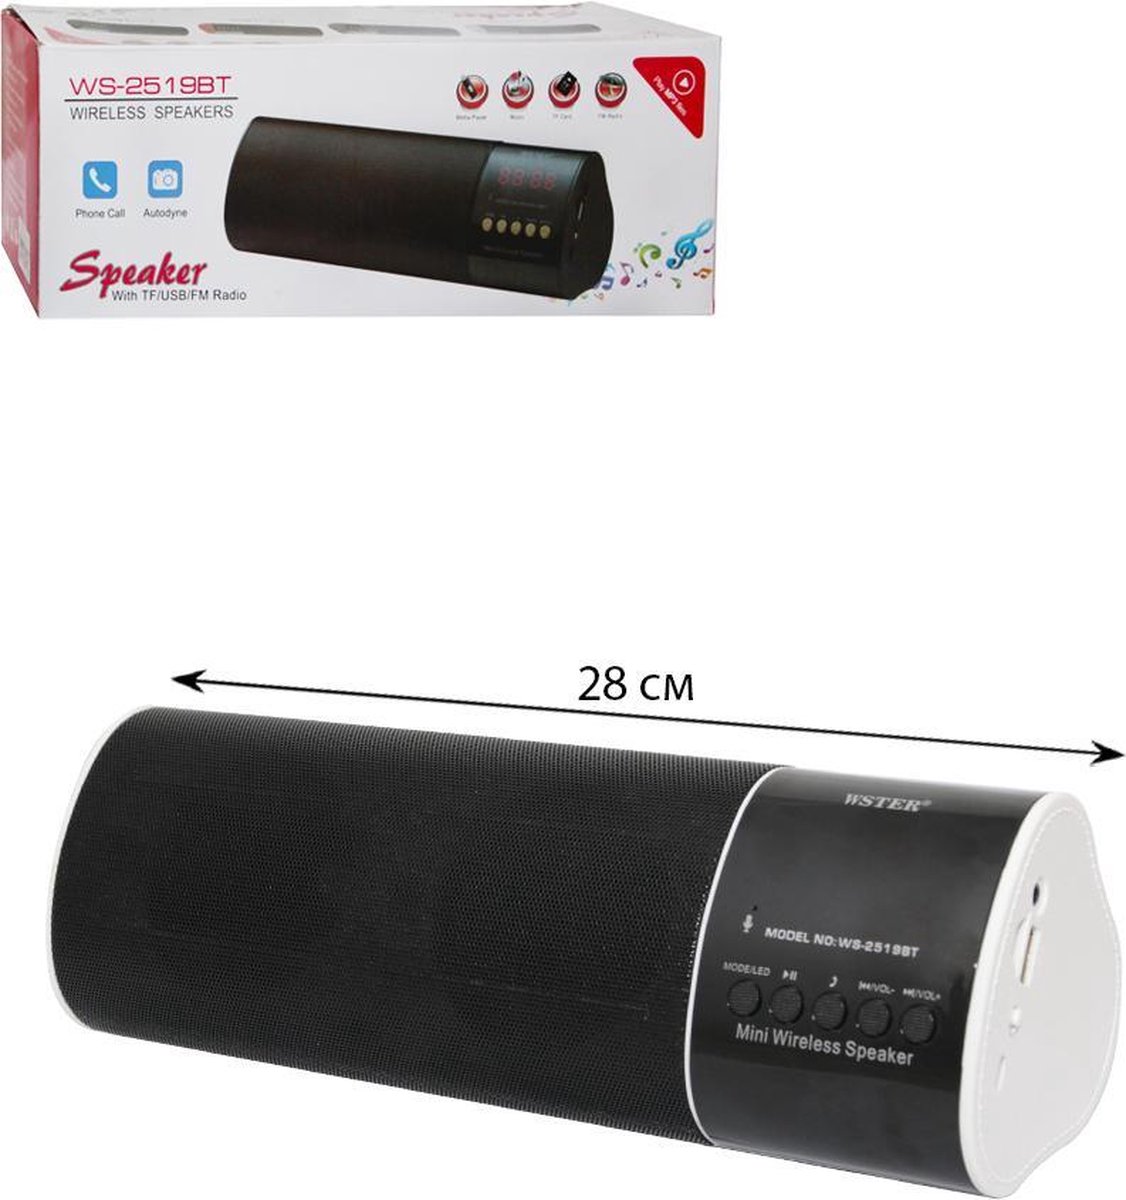 Speaker draadloos WS-2519bt met TF/USB/FM RADIO | bol.com